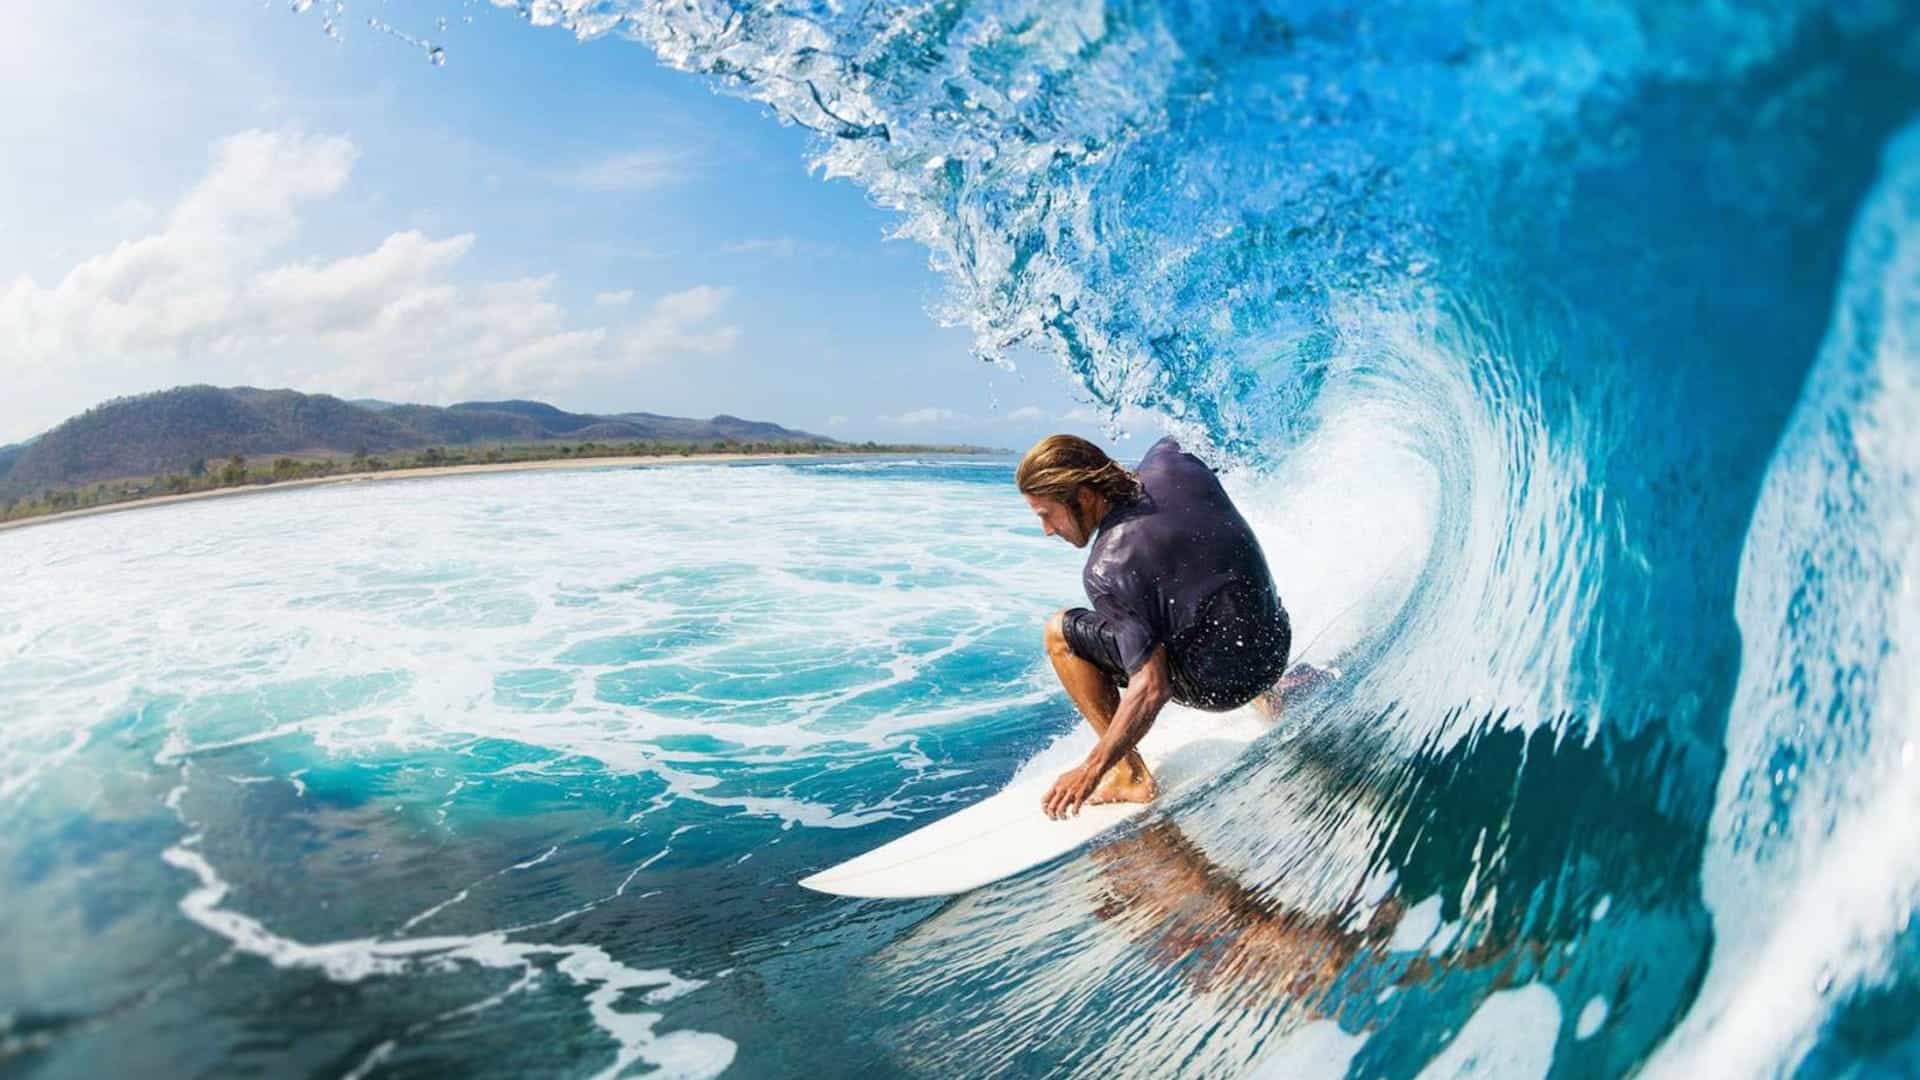 Water surfing photo